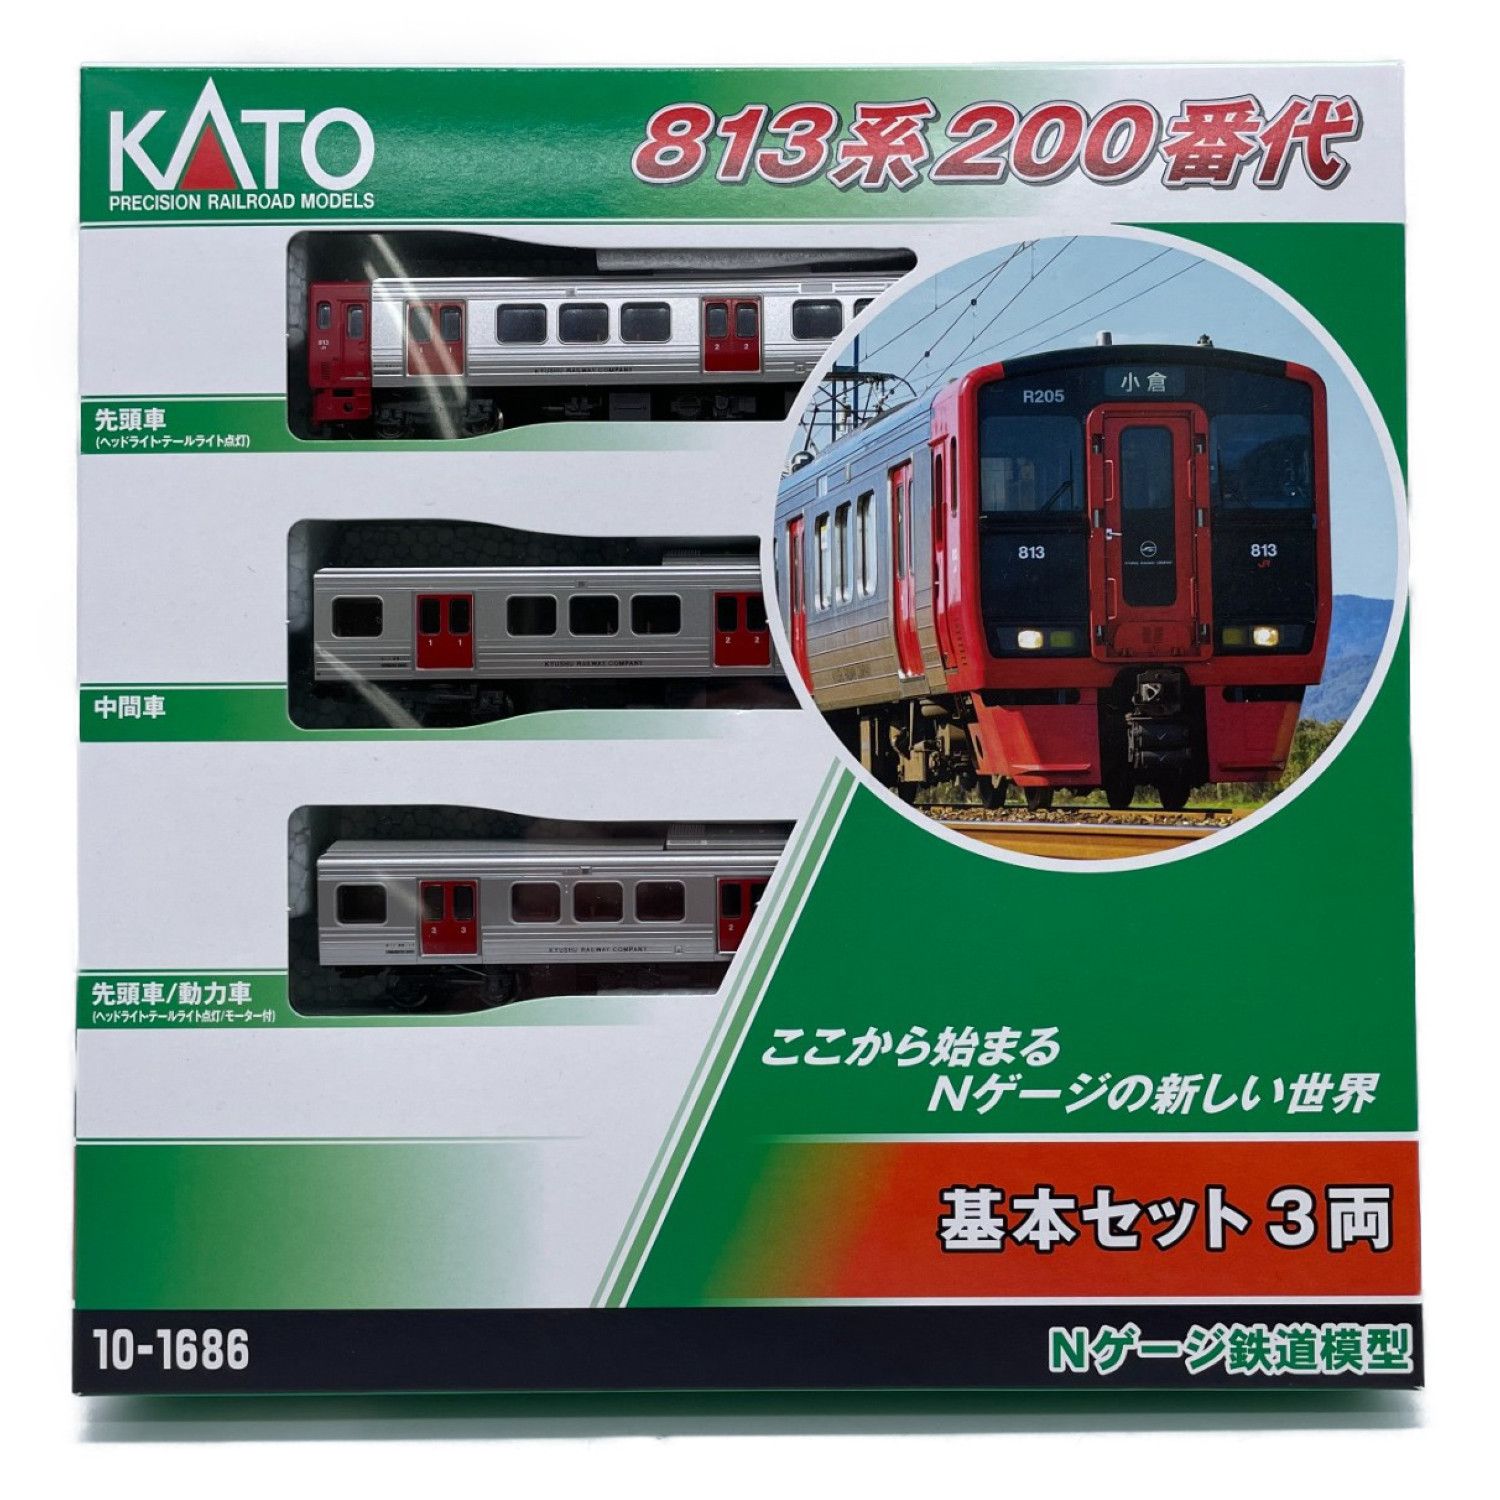 KATO (カトー) Nゲージ 10-1686 813系200番代 基本セット 3両｜トレファクONLINE